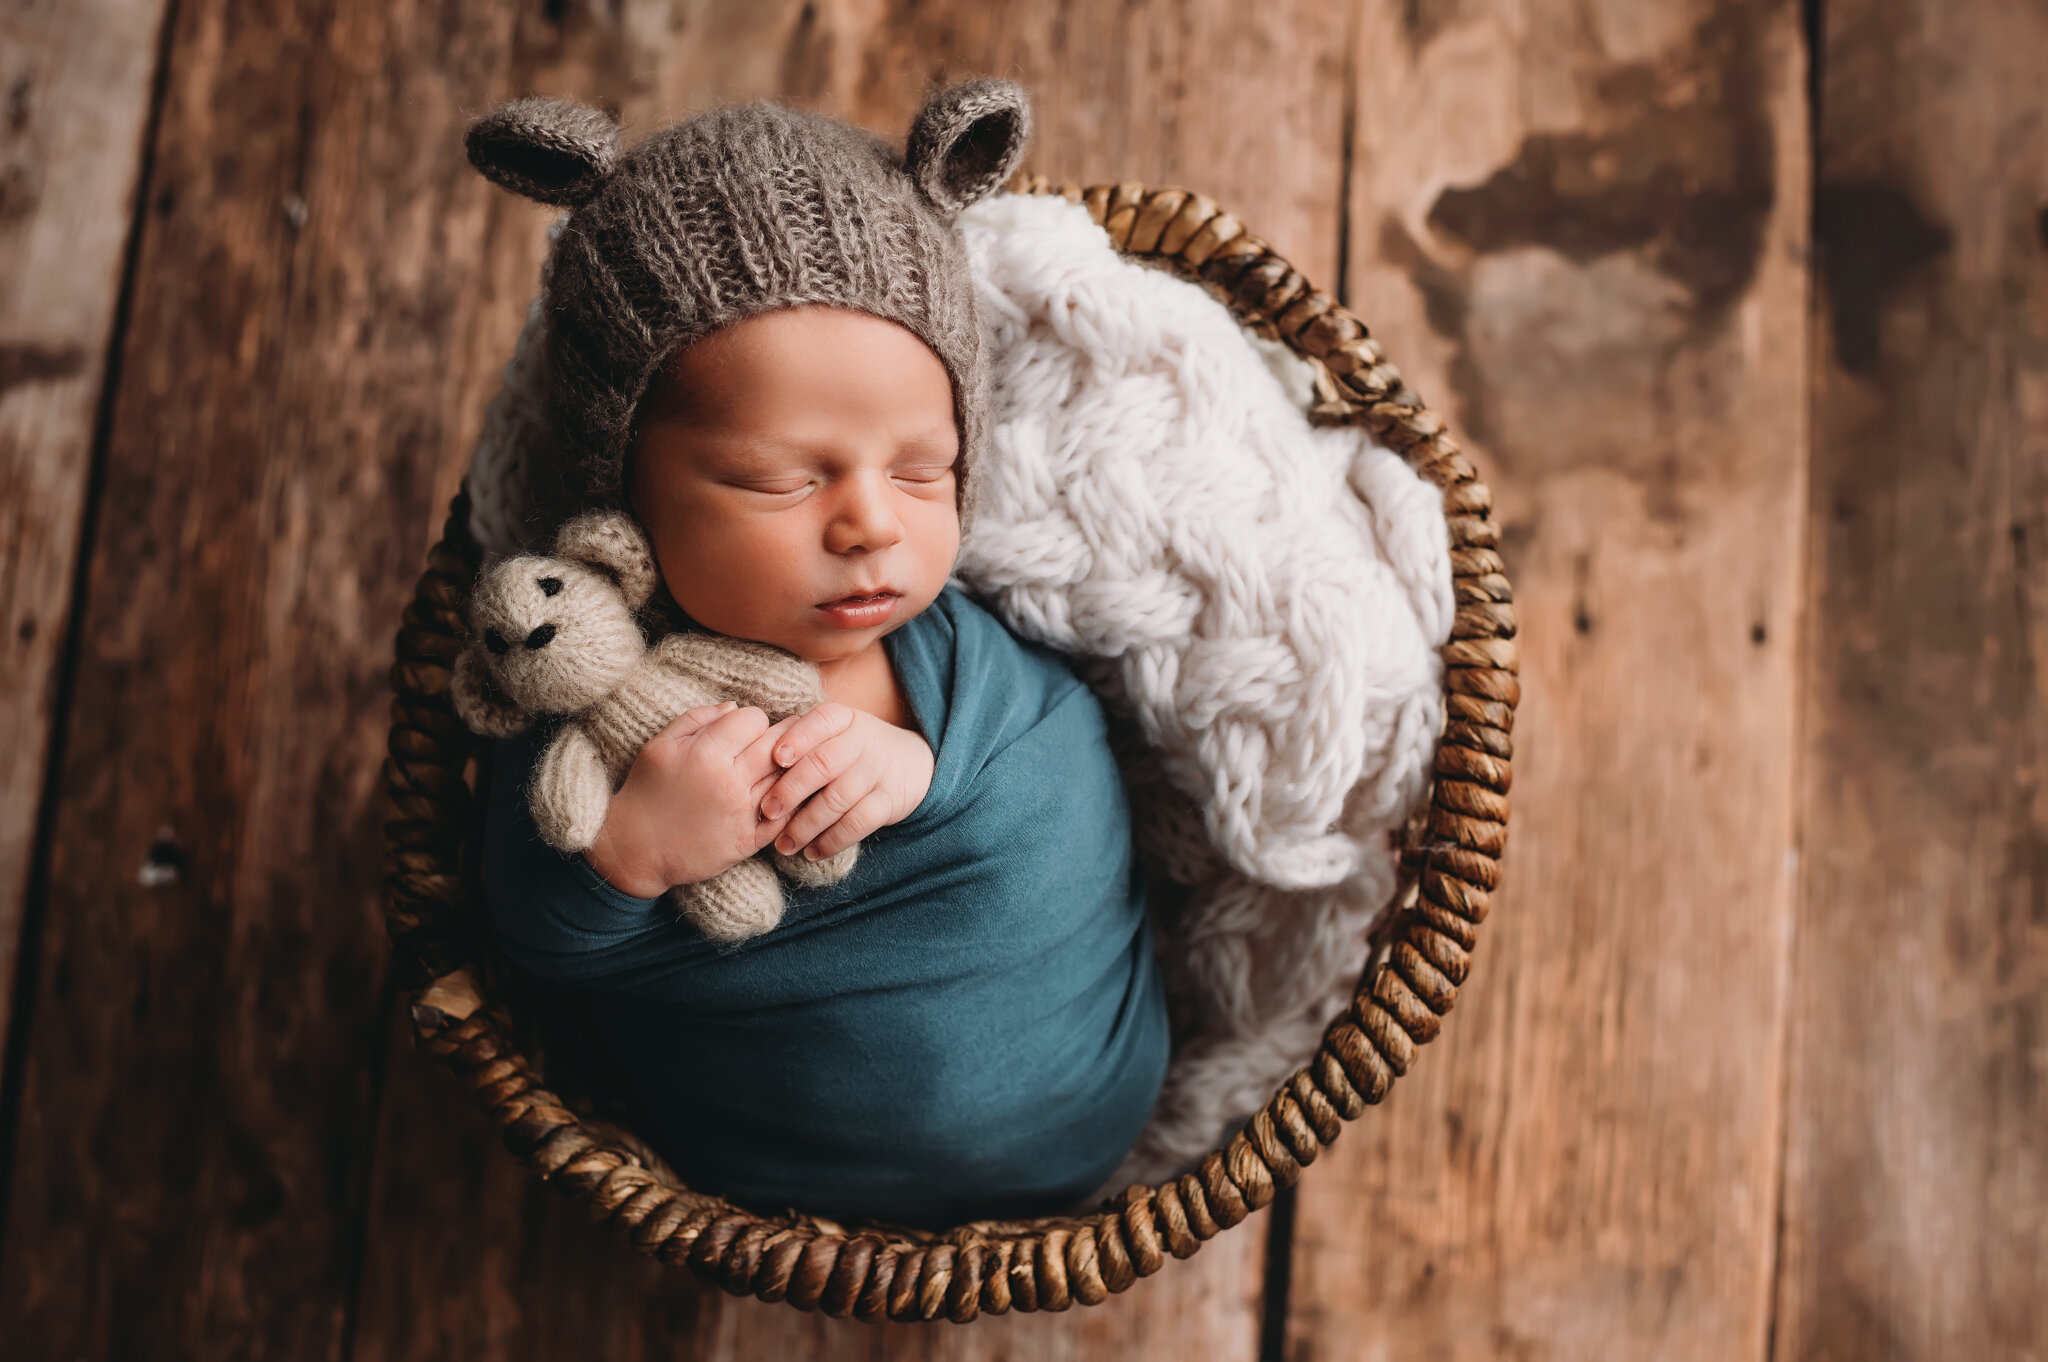 Peoria newborn photographer, baby poses in basket with teddy bear.jpg